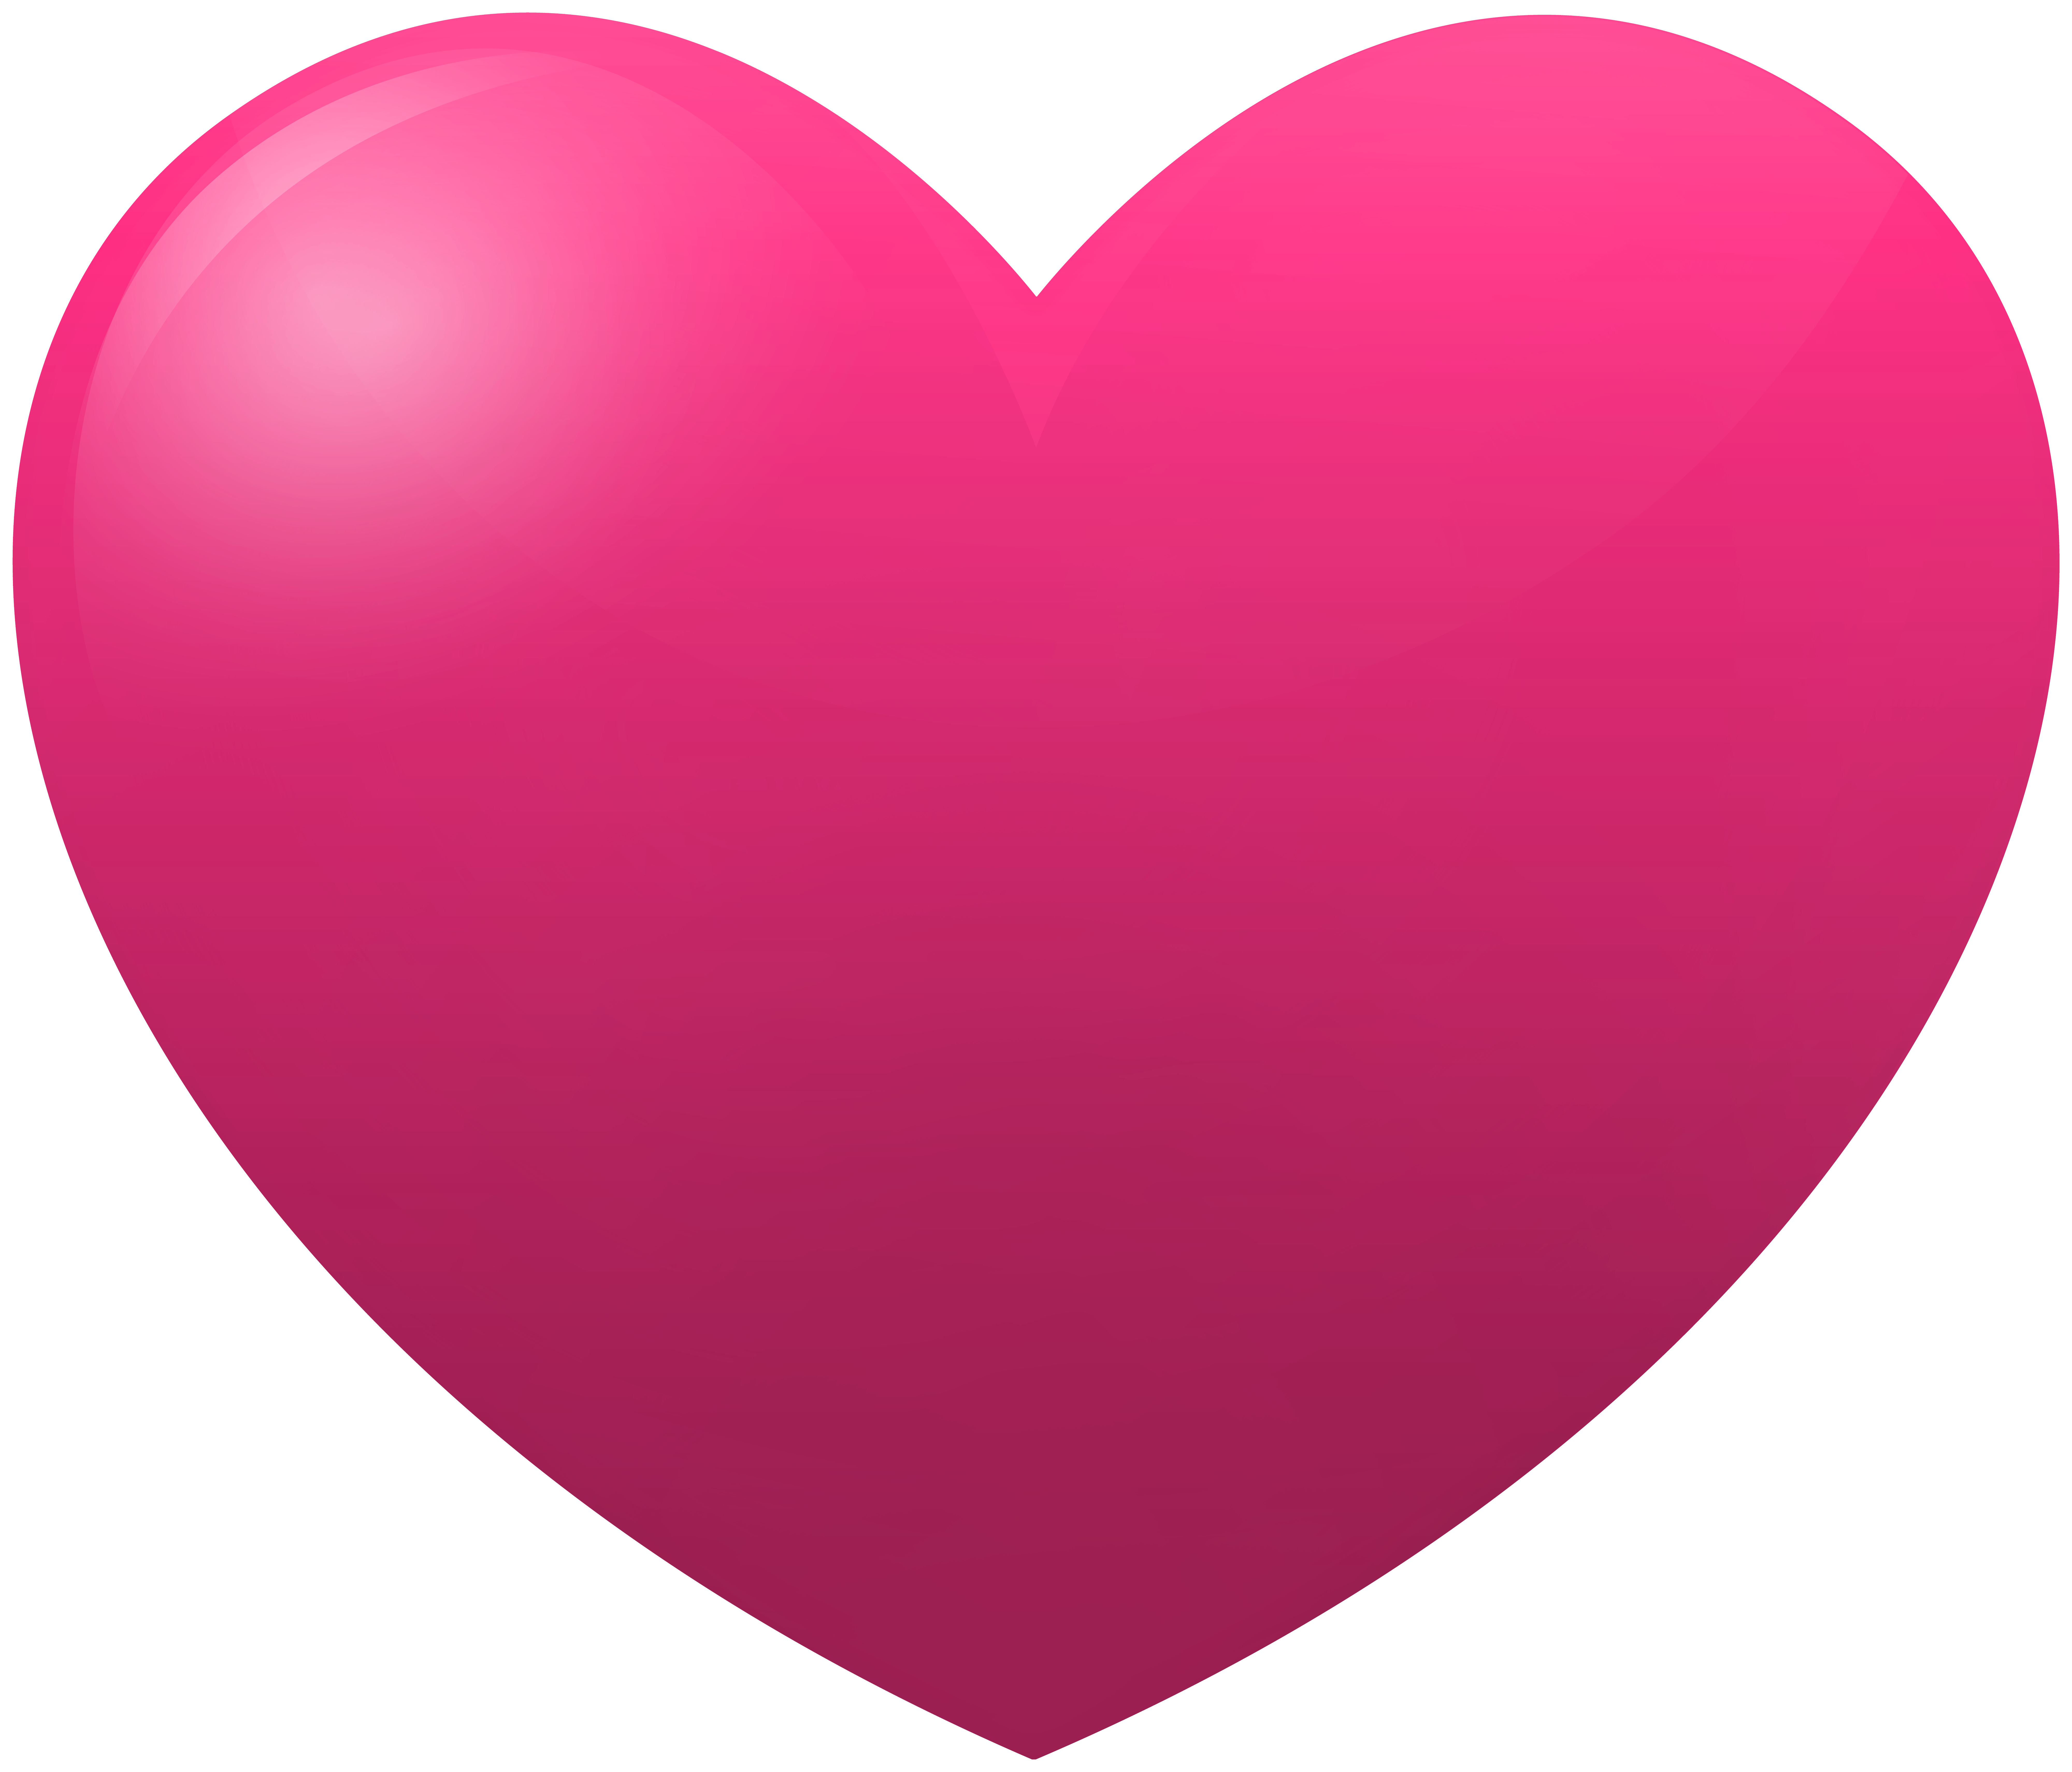 Pink Heart Clip Art at  - vector clip art online, royalty